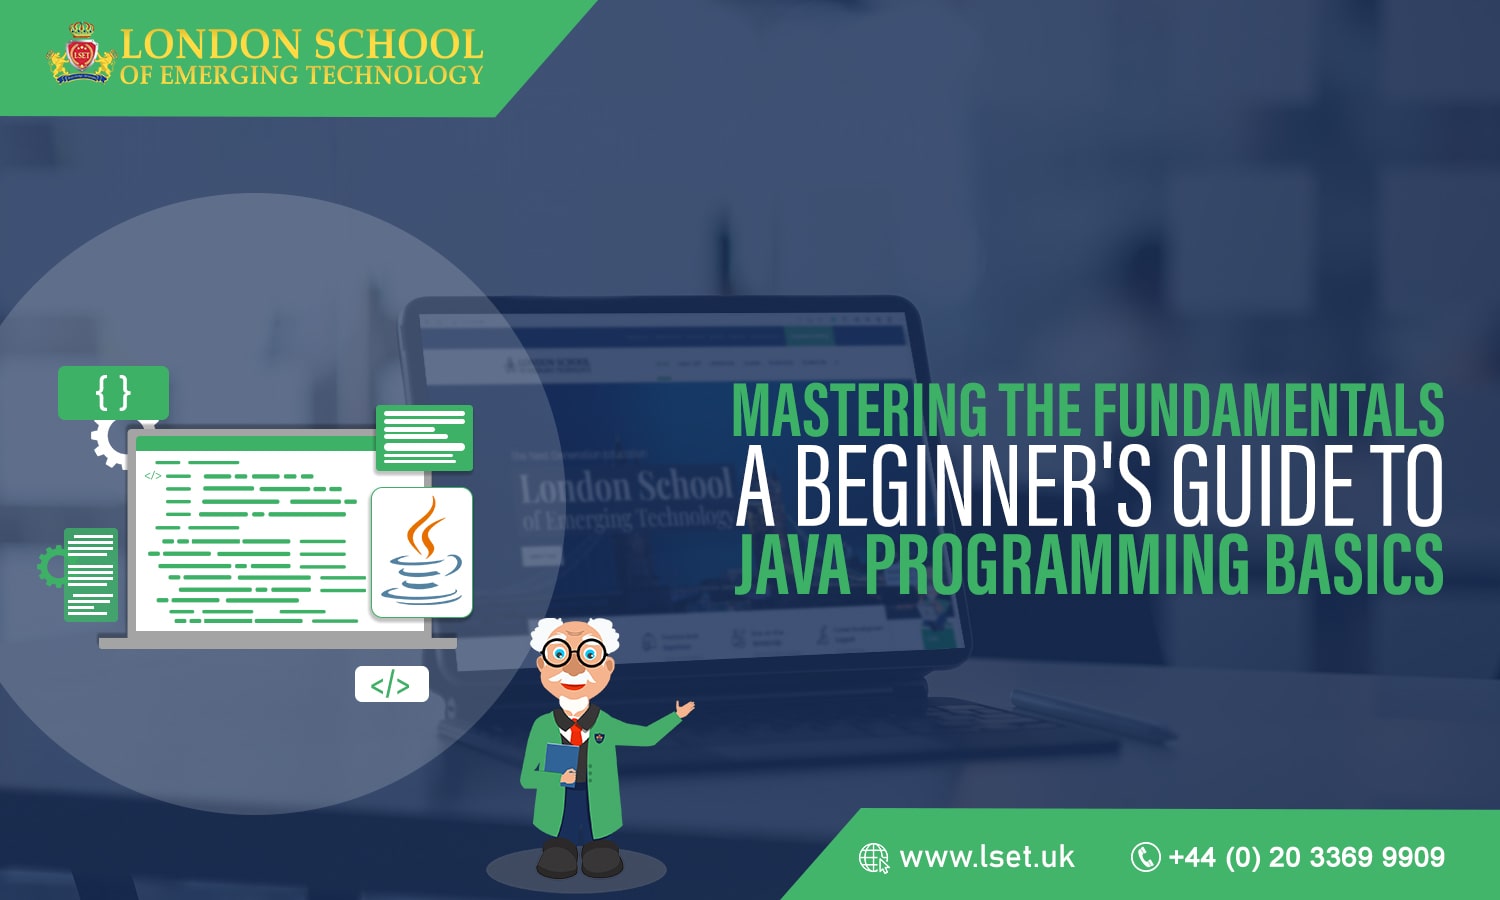 Java Programming Basics